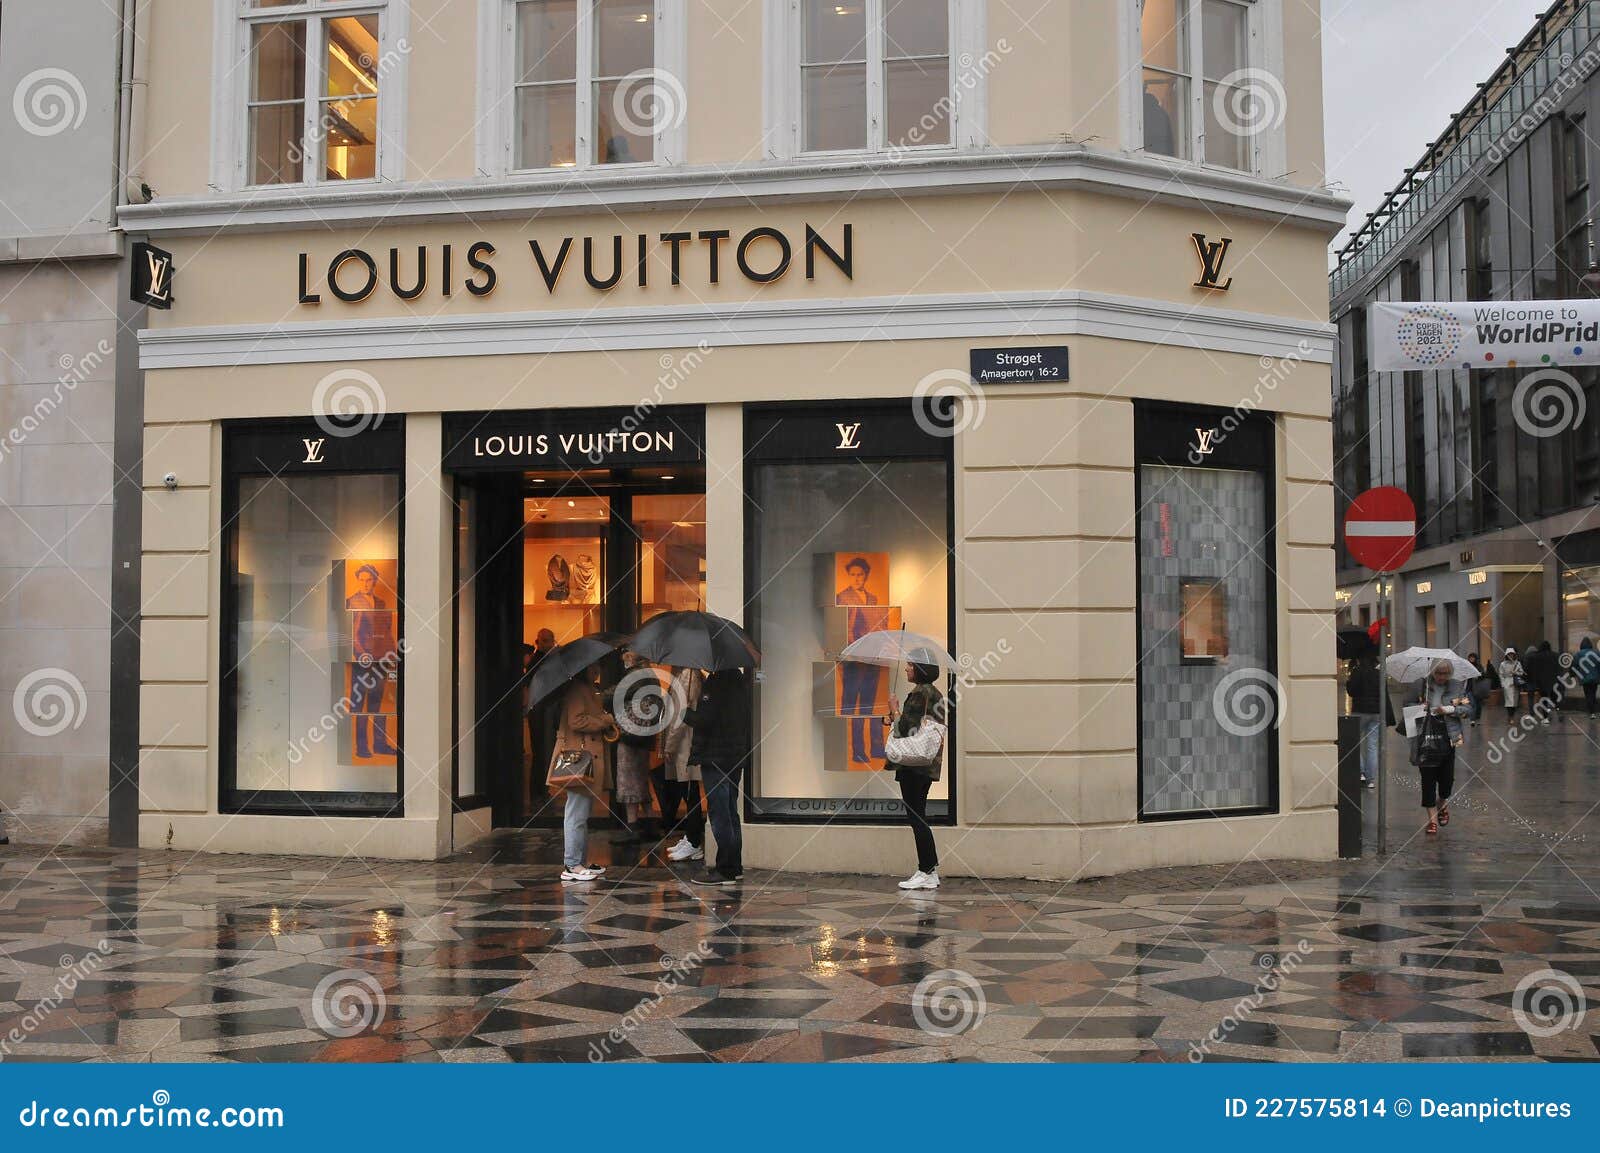 Forsvinde Forfølge terrorisme 147 Louis Umbrella Photos - Free & Royalty-Free Stock Photos from Dreamstime